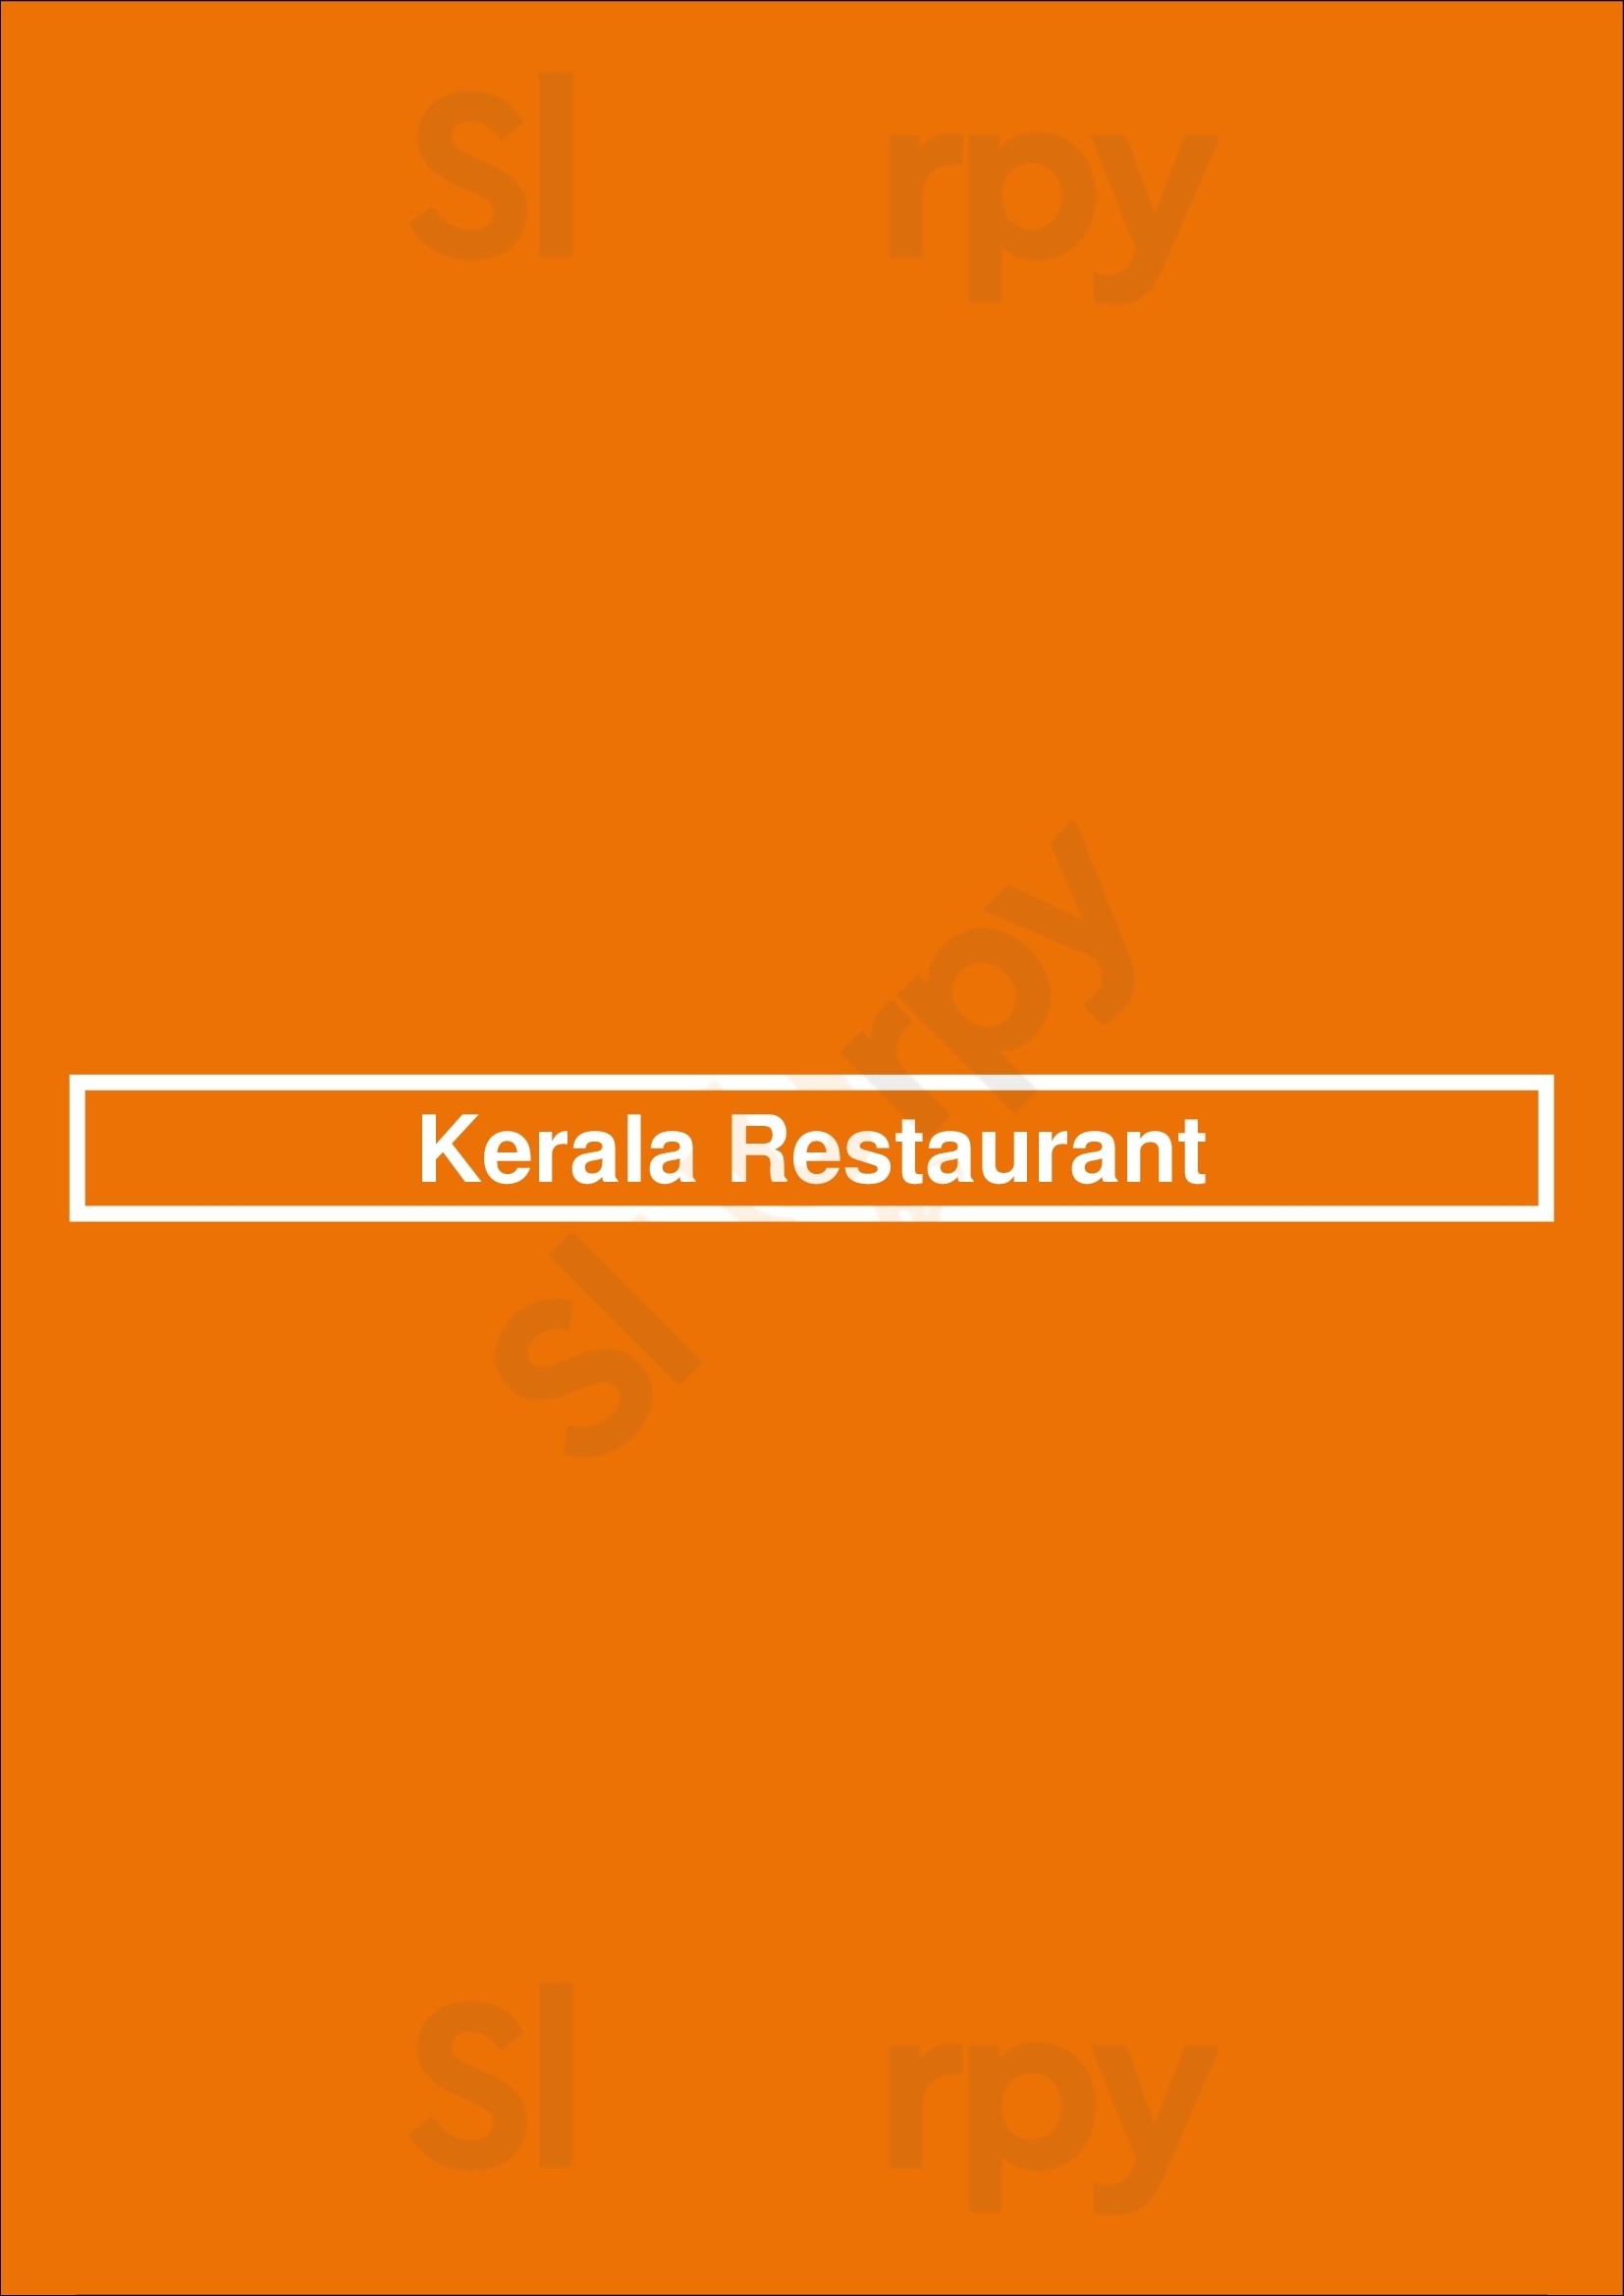 Kerala Restaurant Lisboa Menu - 1